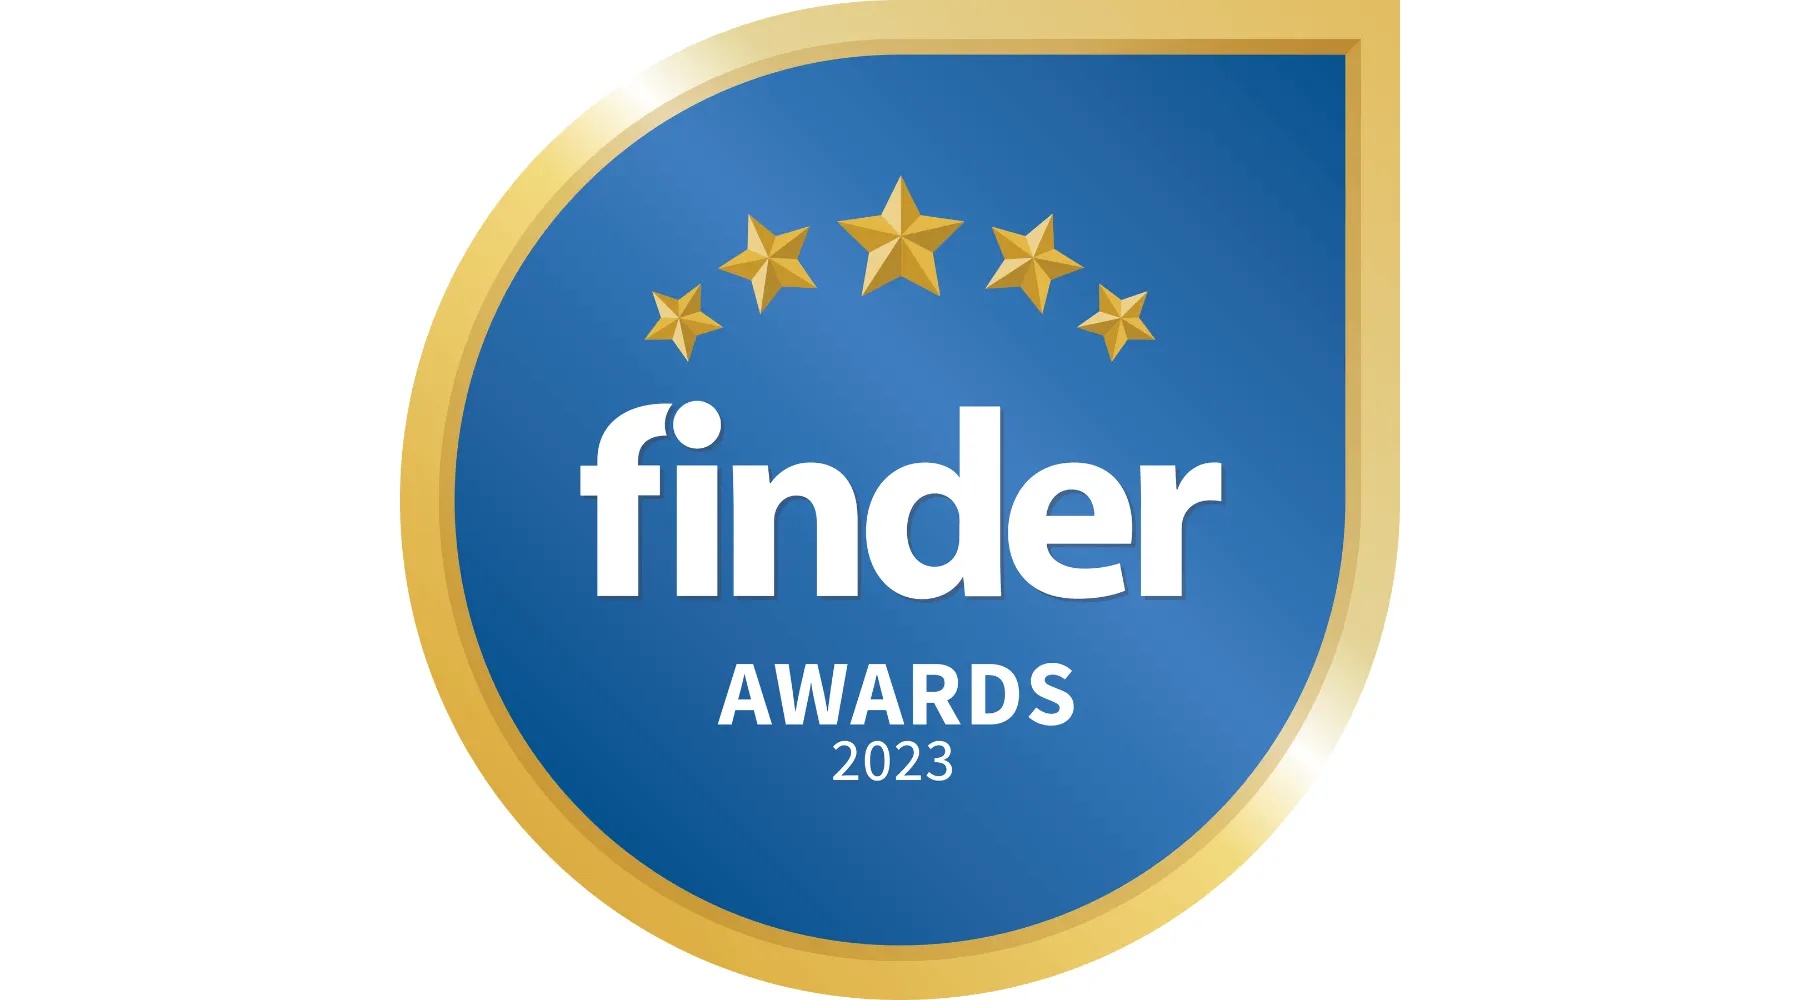 finder_awards_2023_generic_1800x1000